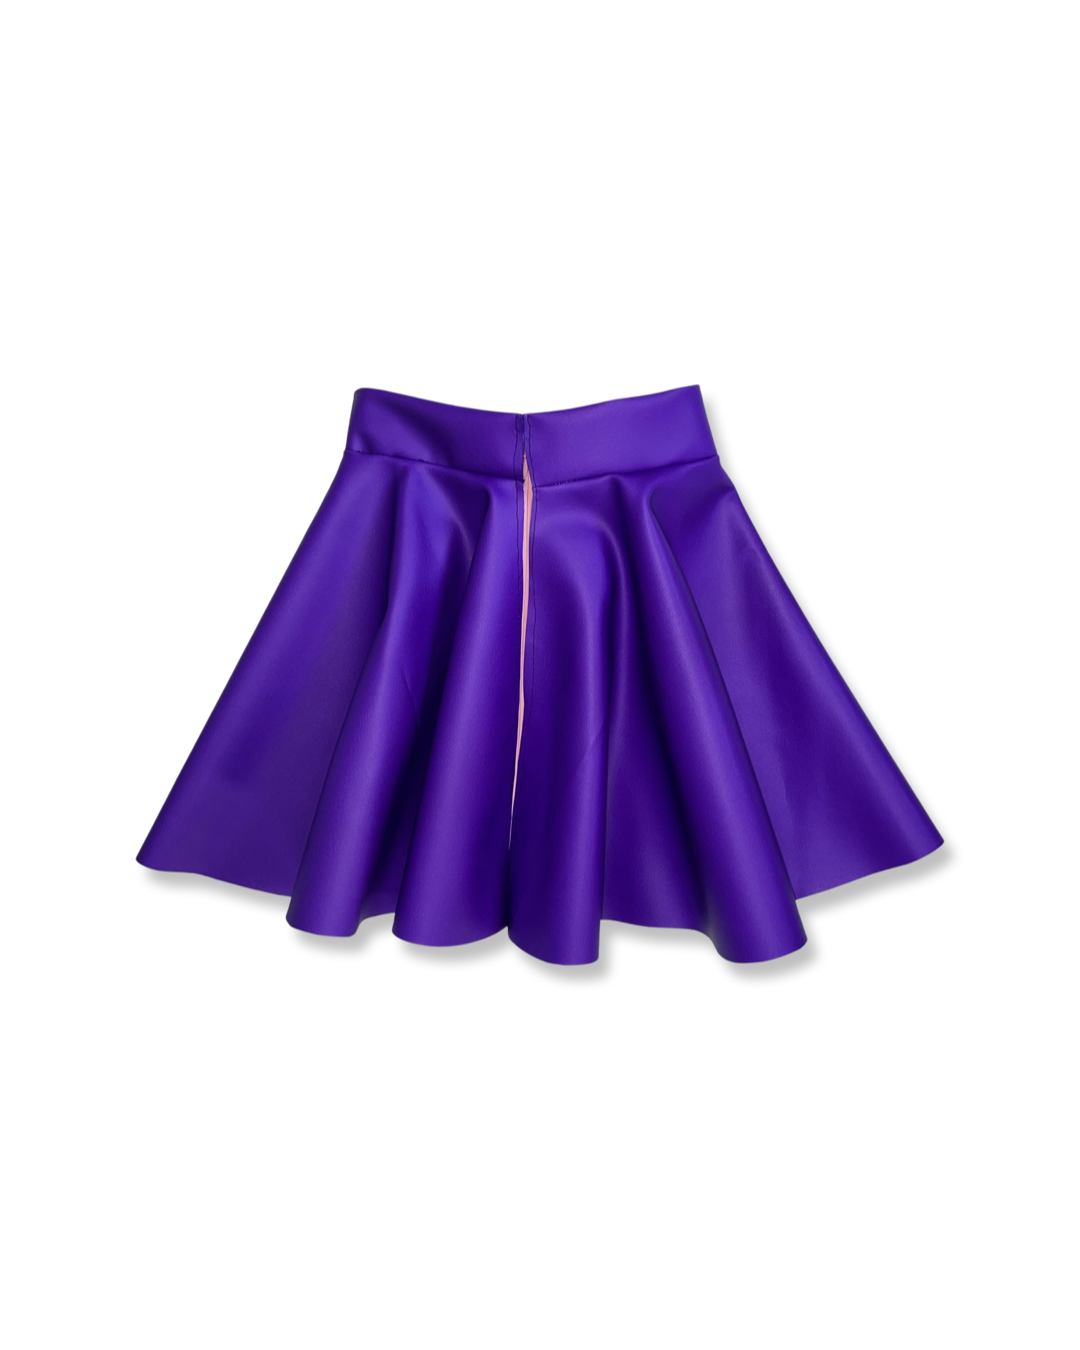 Uniform Circle Skirt in Bright Purple